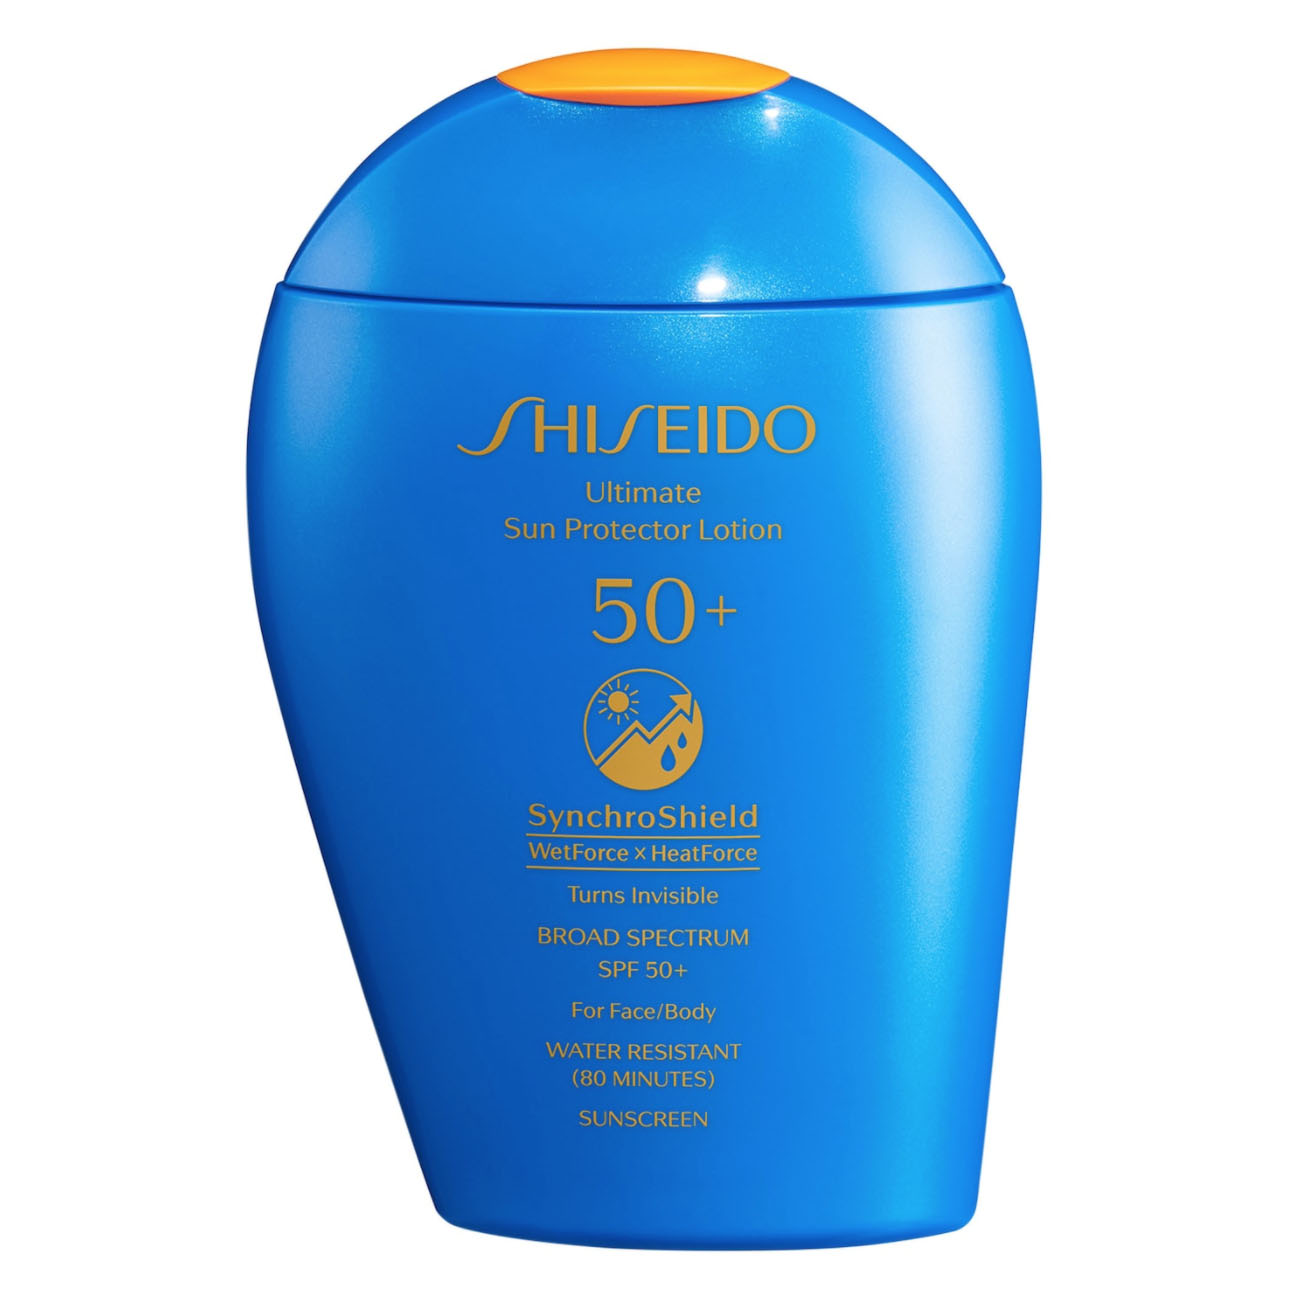 Shiseido Ultimate Sun Protector Lotion SPF 50+ Sunscreen review